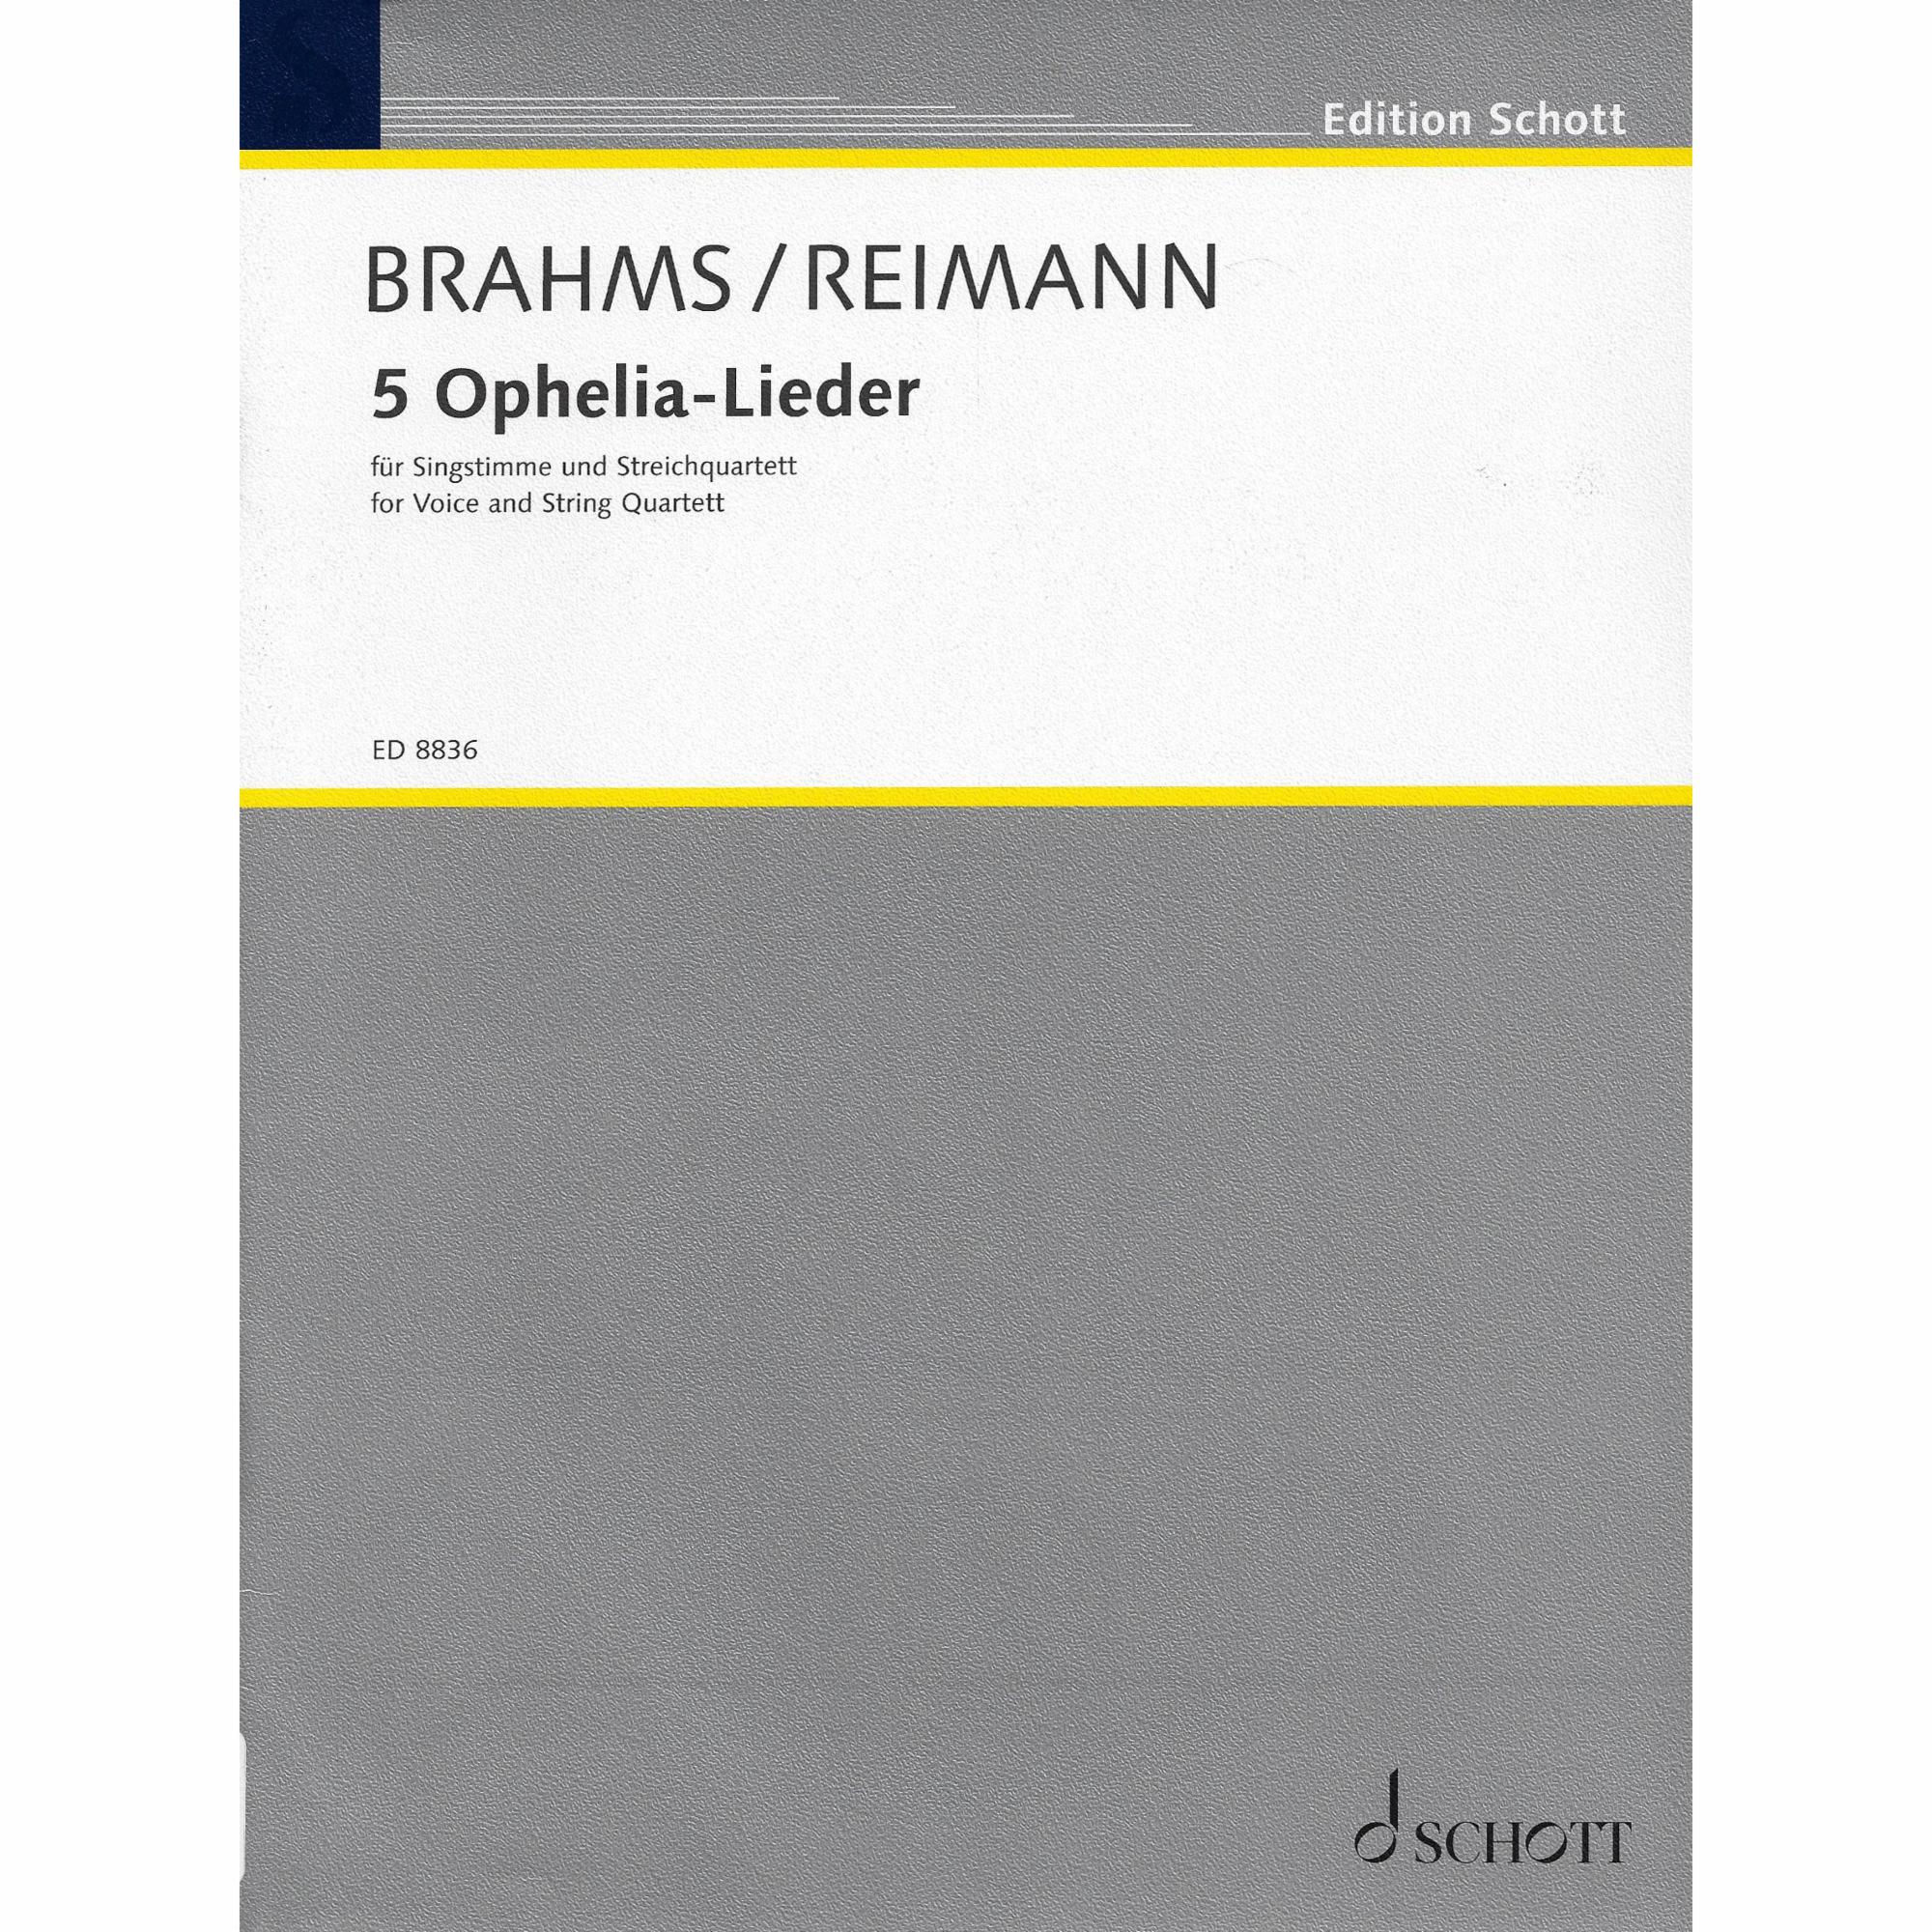 Brahms -- 5 Ophelia-Lieder for Voice and String Quartet